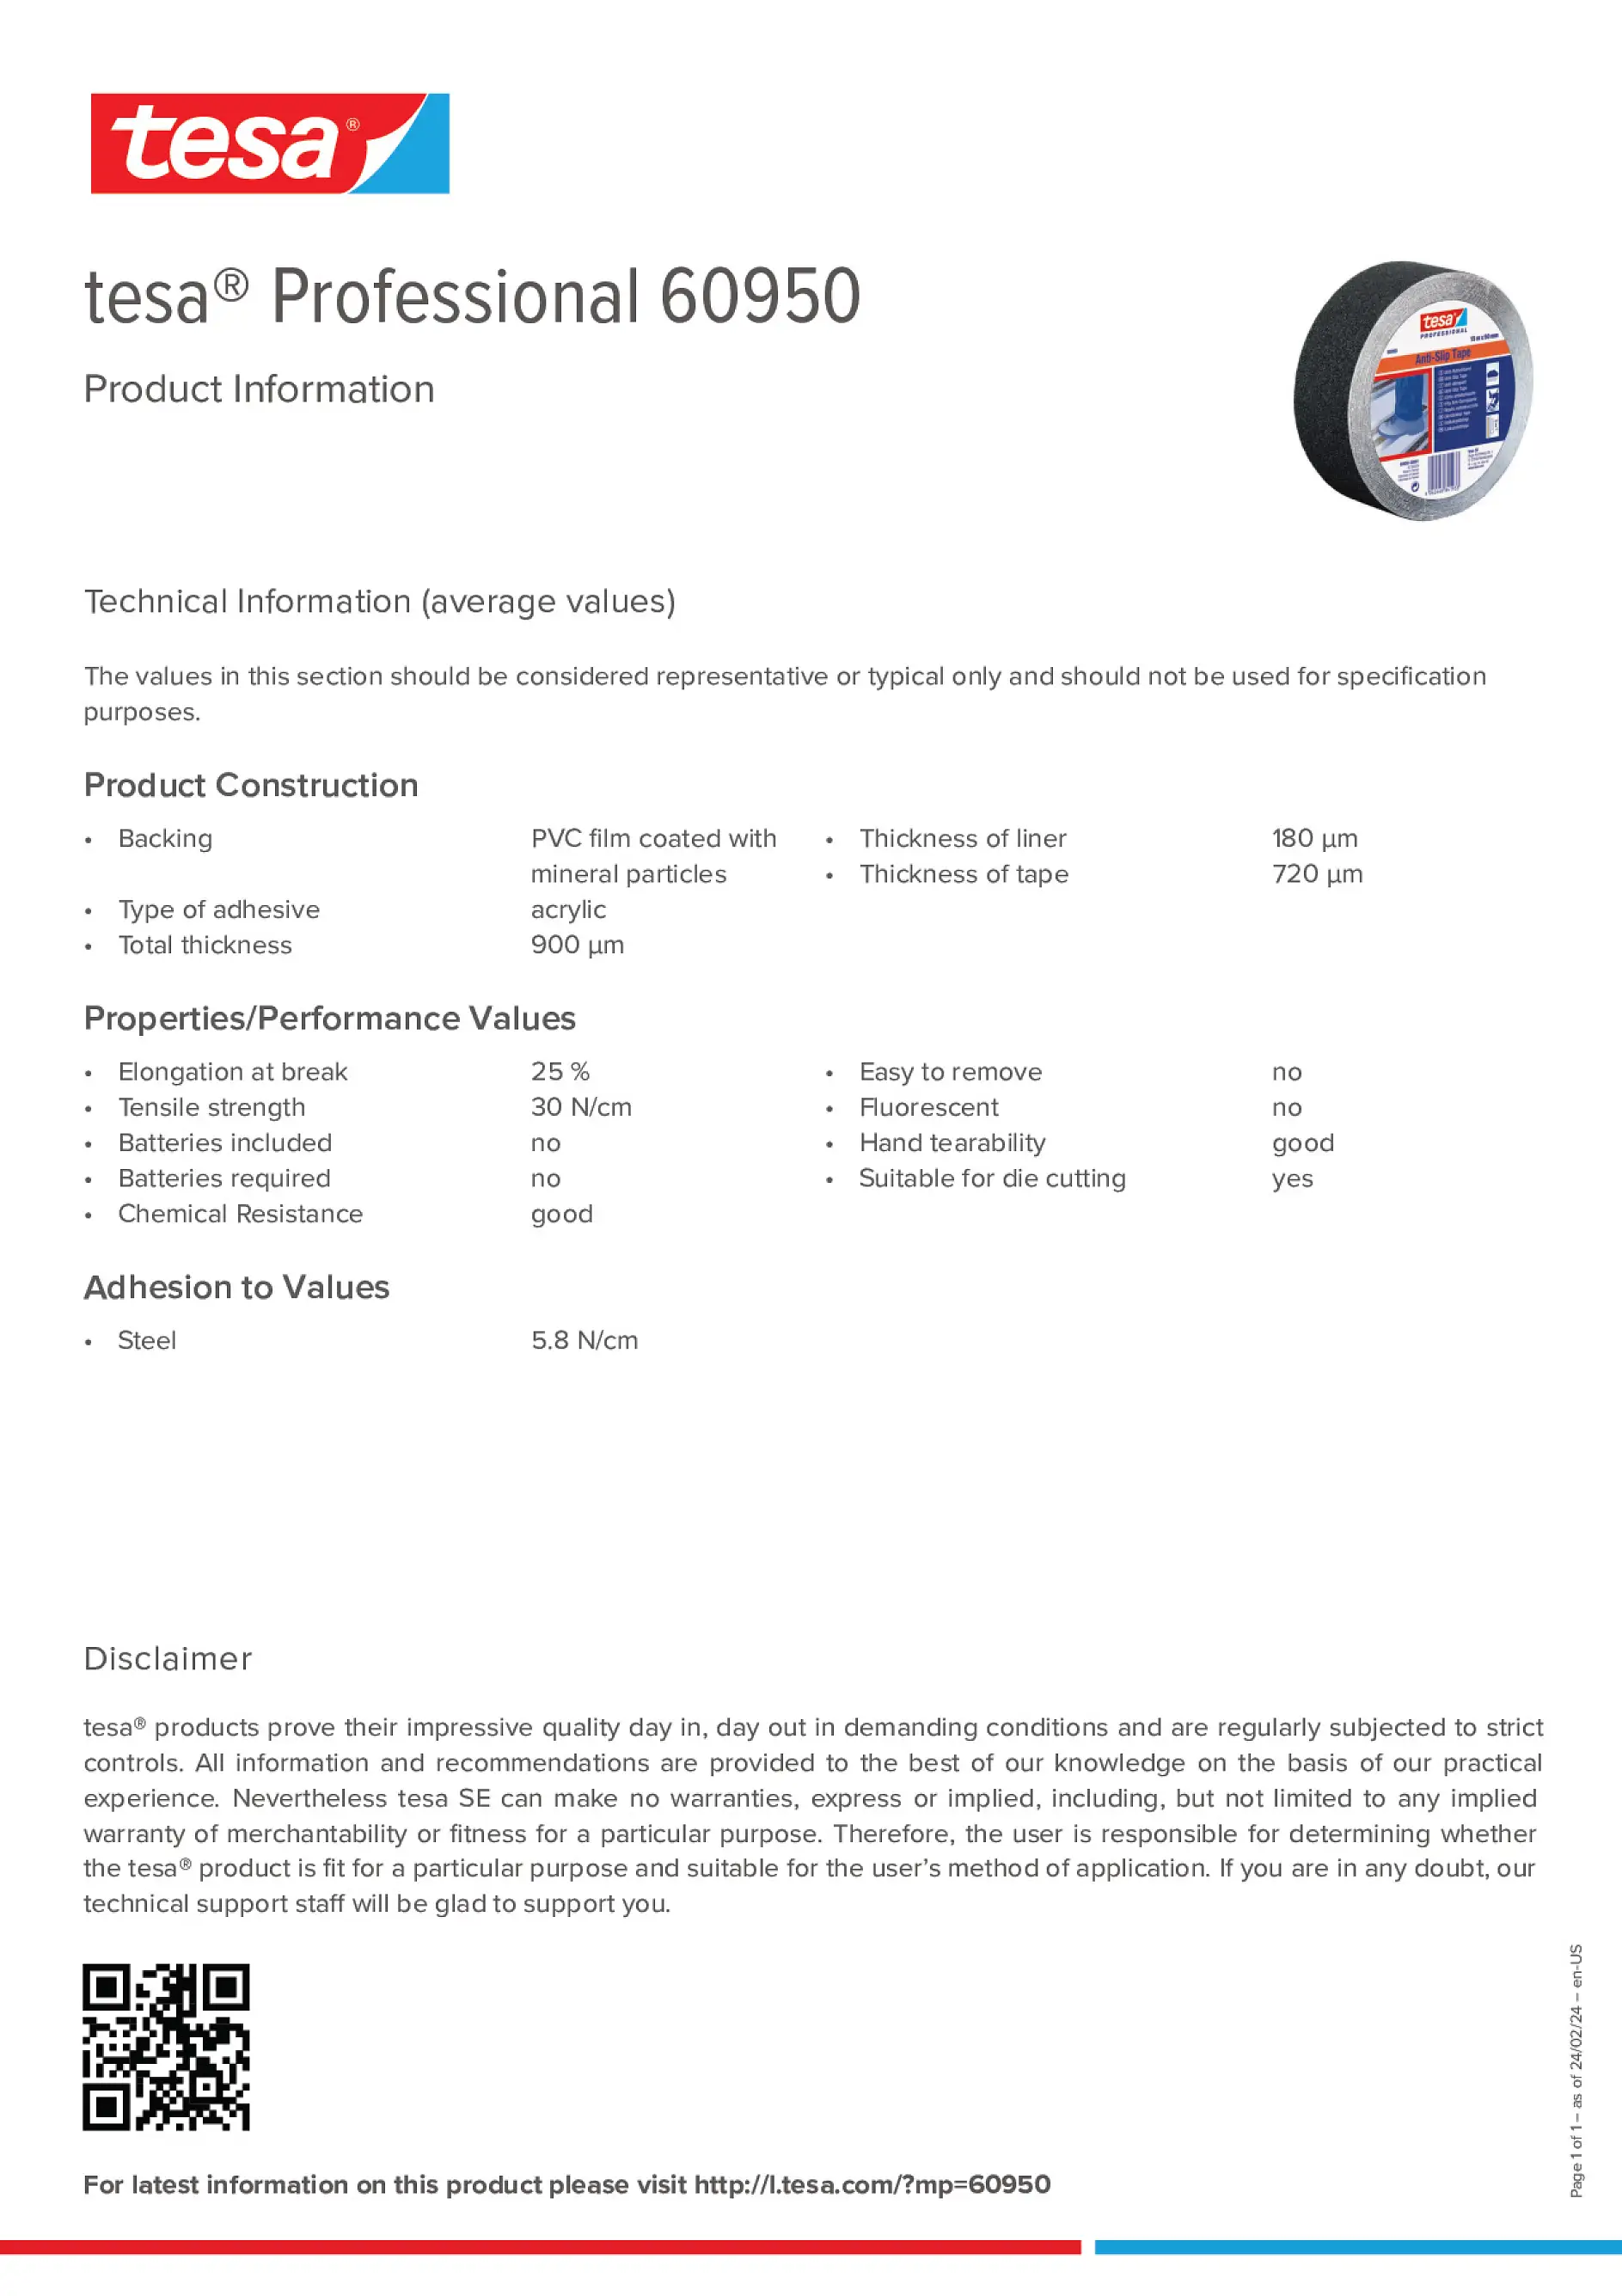 Product information_tesa® Professional 60950_en